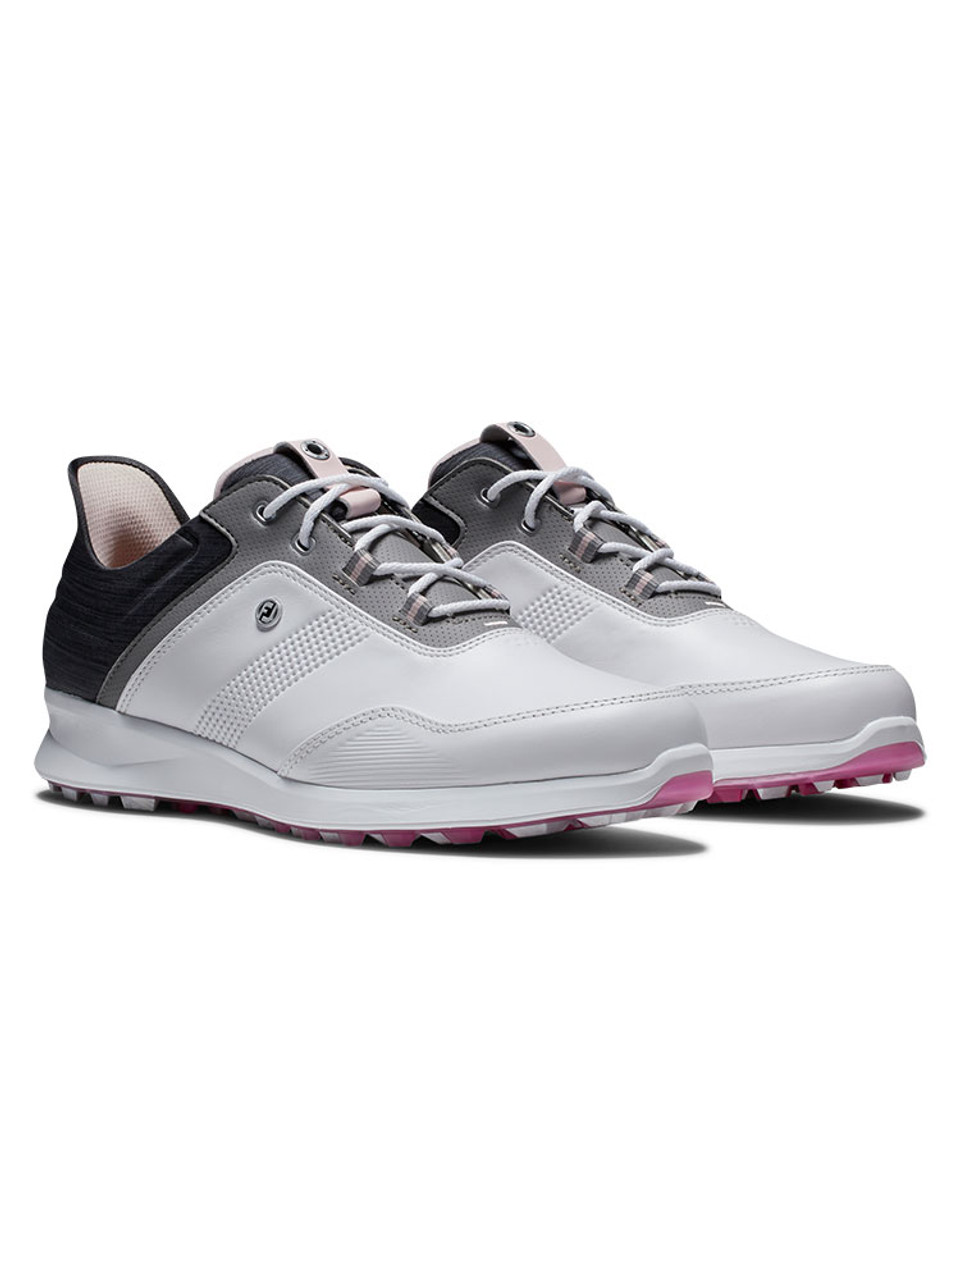 FootJoy Women's Stratos Golf Shoes - White/Black - Womens | GolfBox